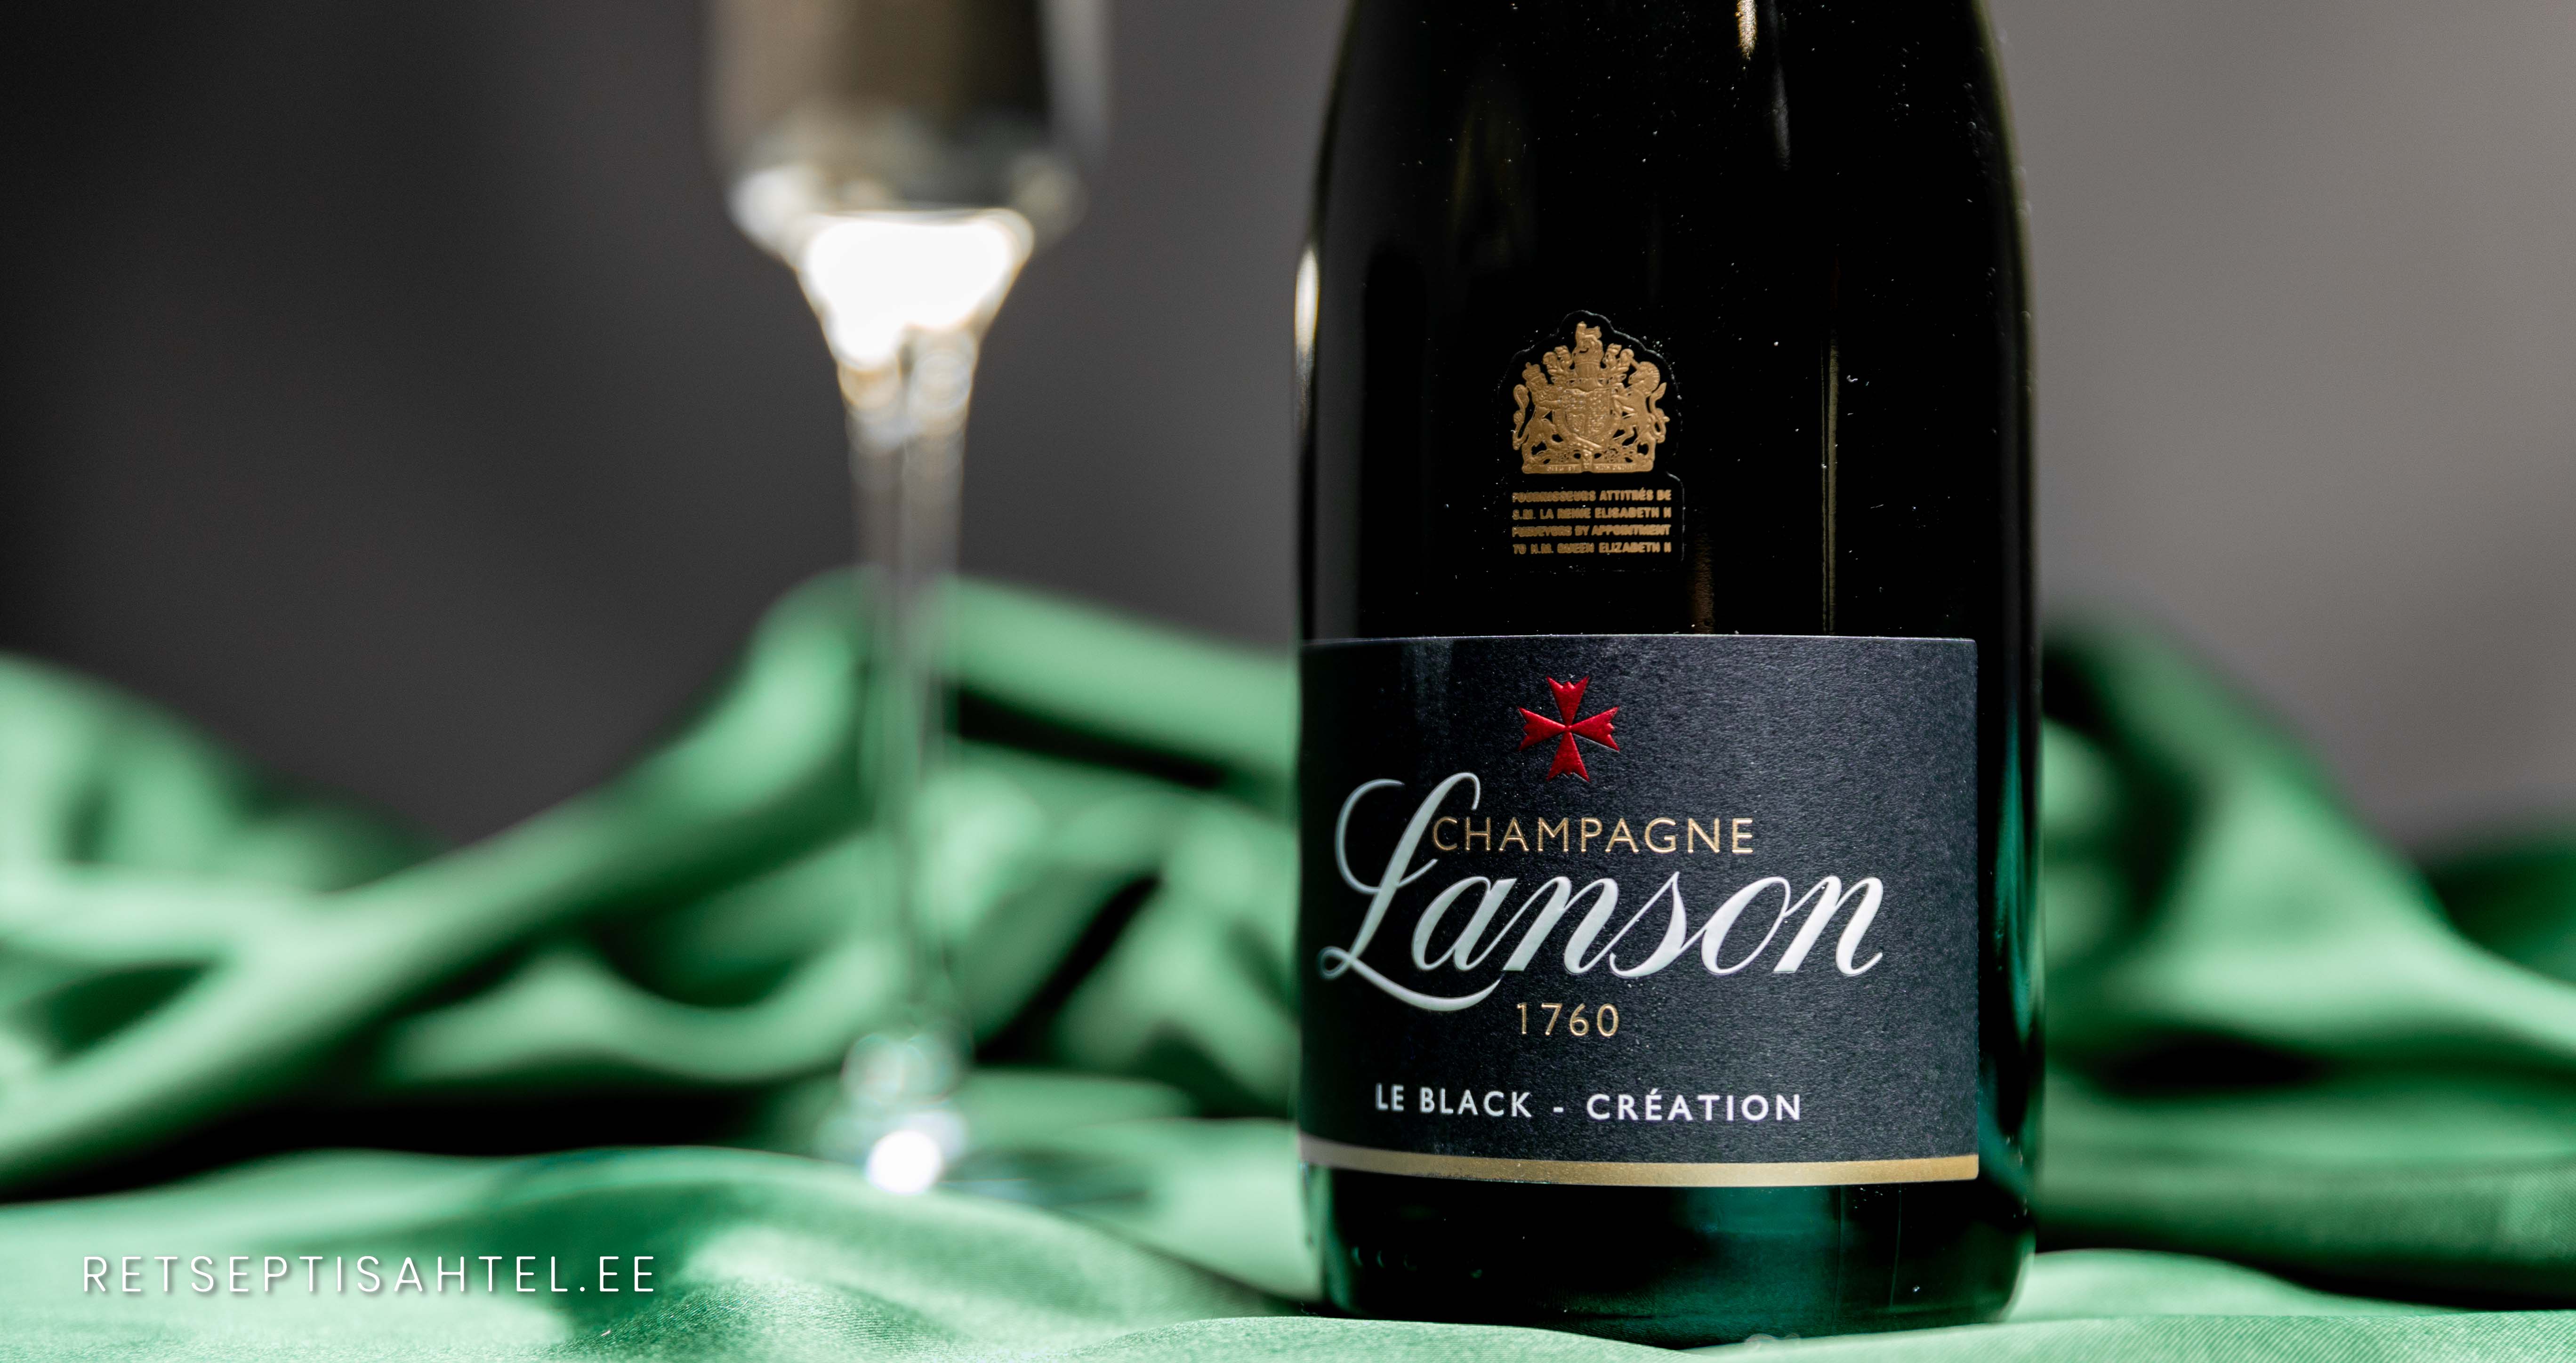 Champagne Lanson Black Label Brut